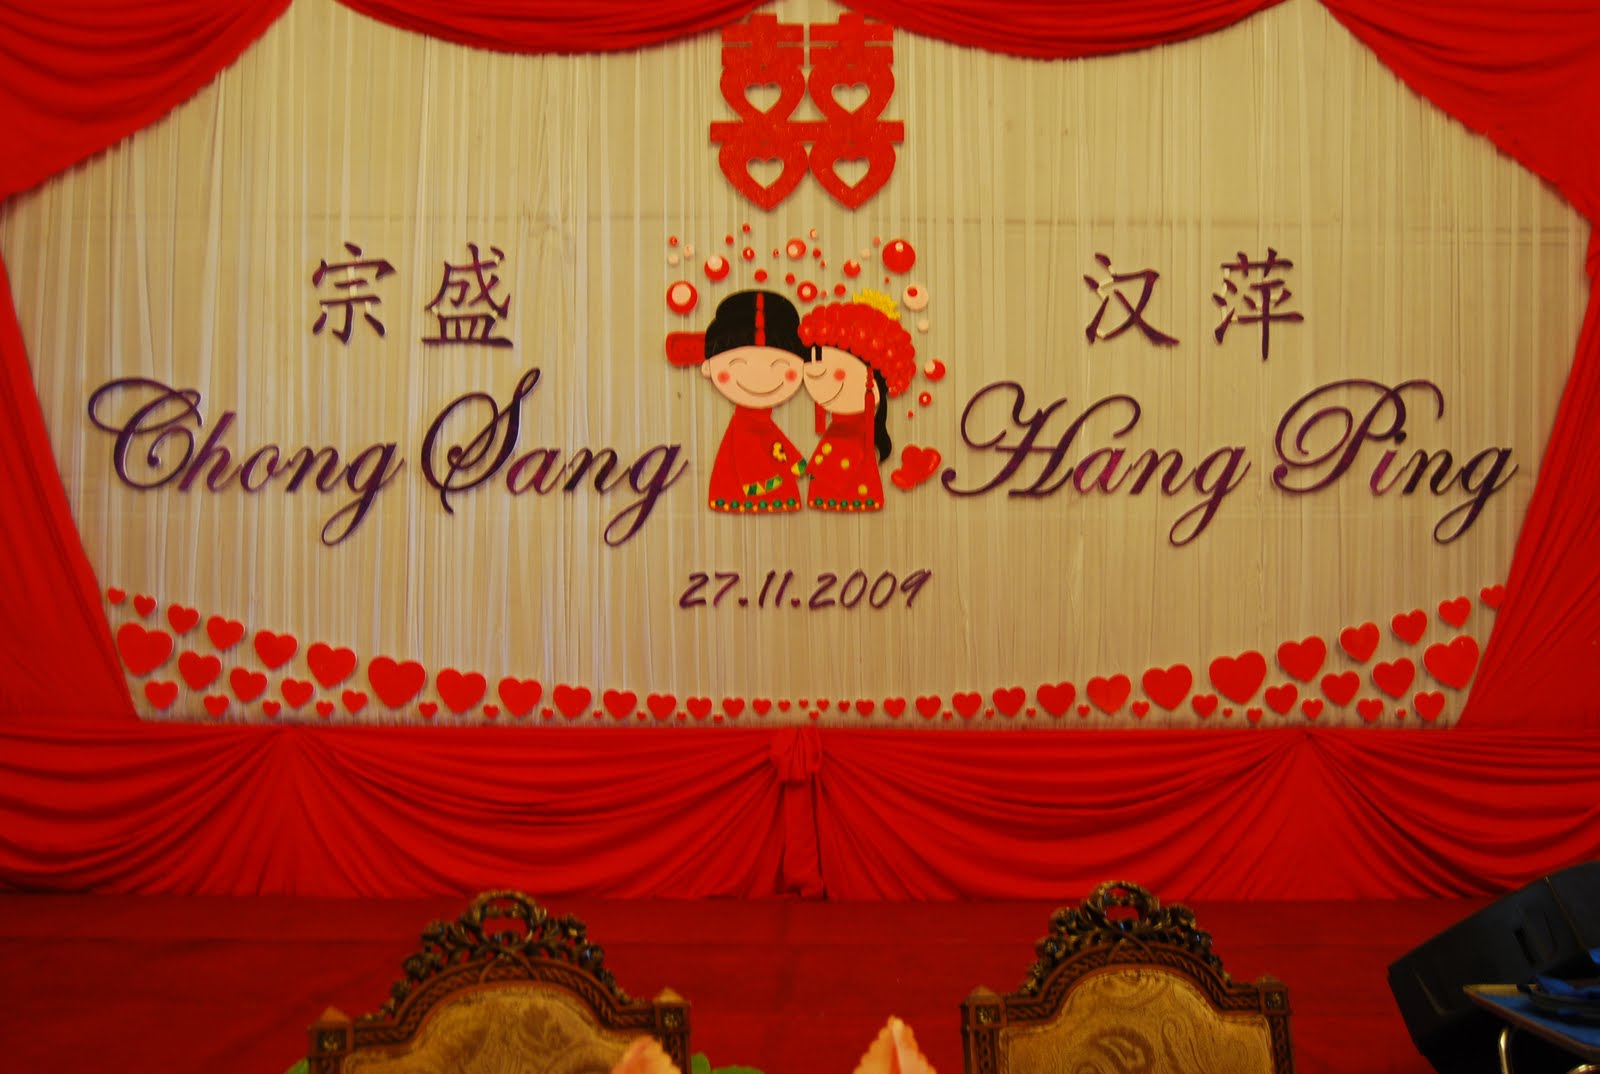 Wedding backdrop for Chong